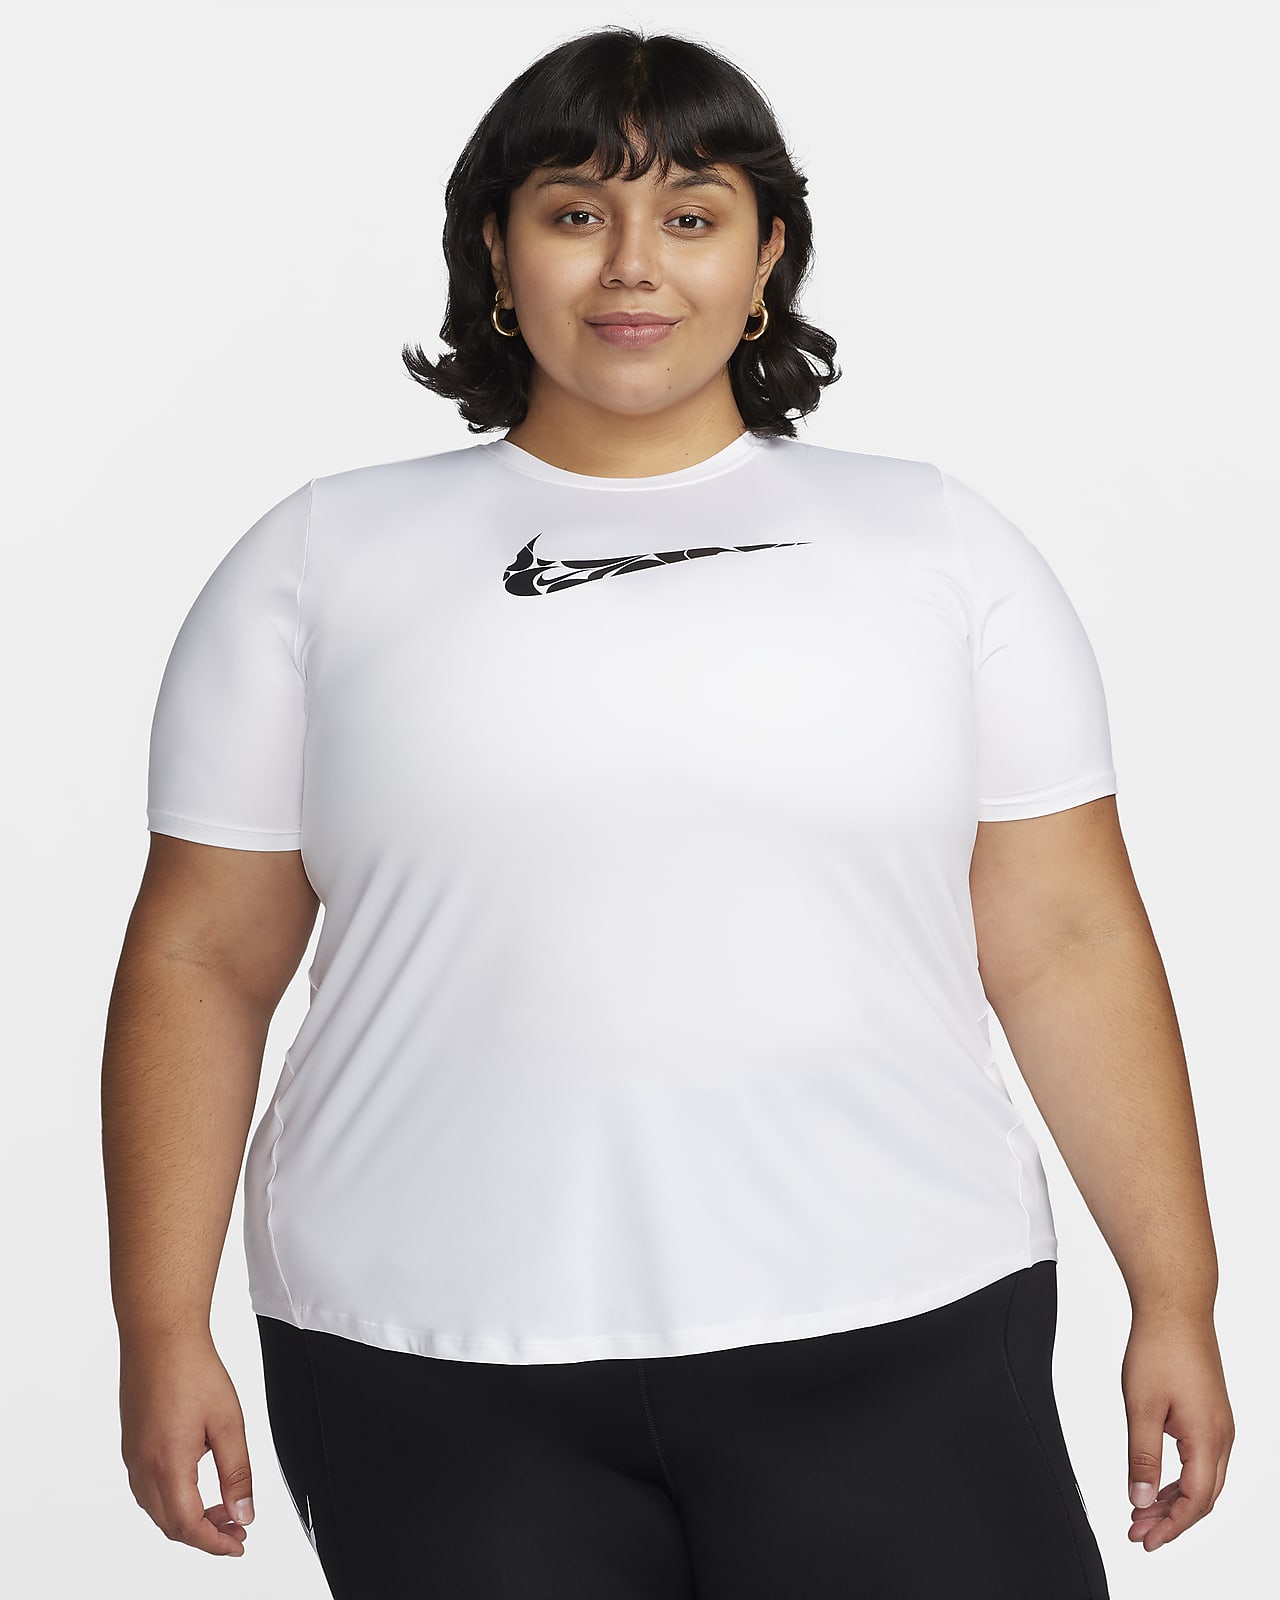 Nike One Swoosh Dri-FIT hardlooptop met korte mouwen voor dames (Plus Size)